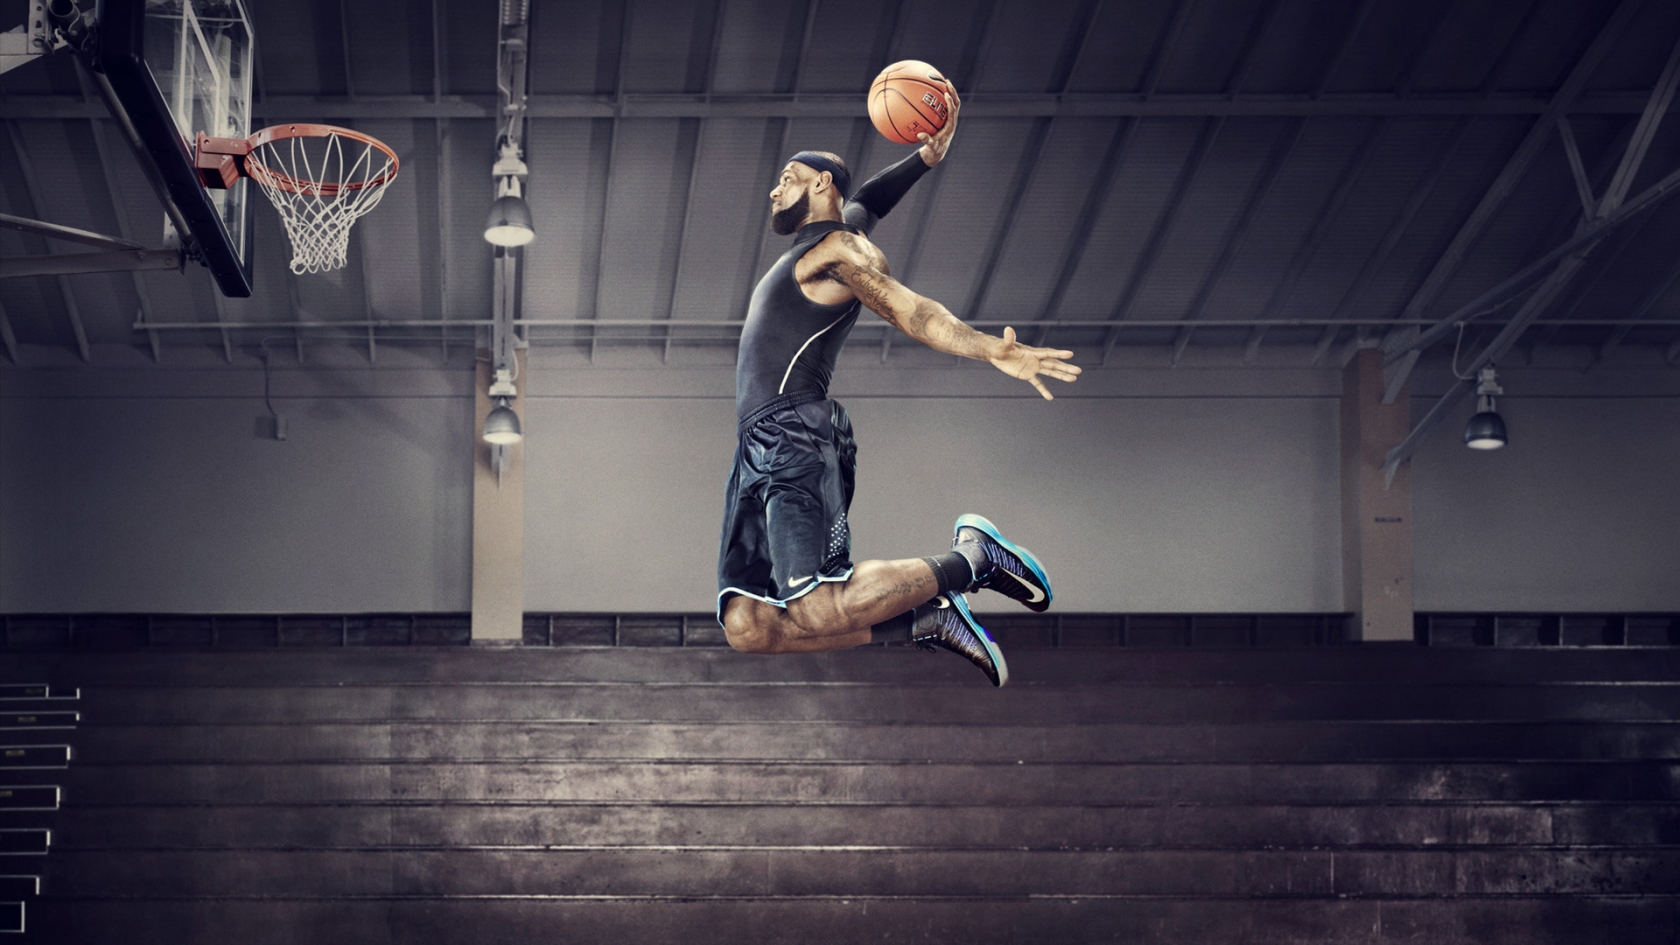 Nike Basketball for 1680 x 945 HDTV resolution